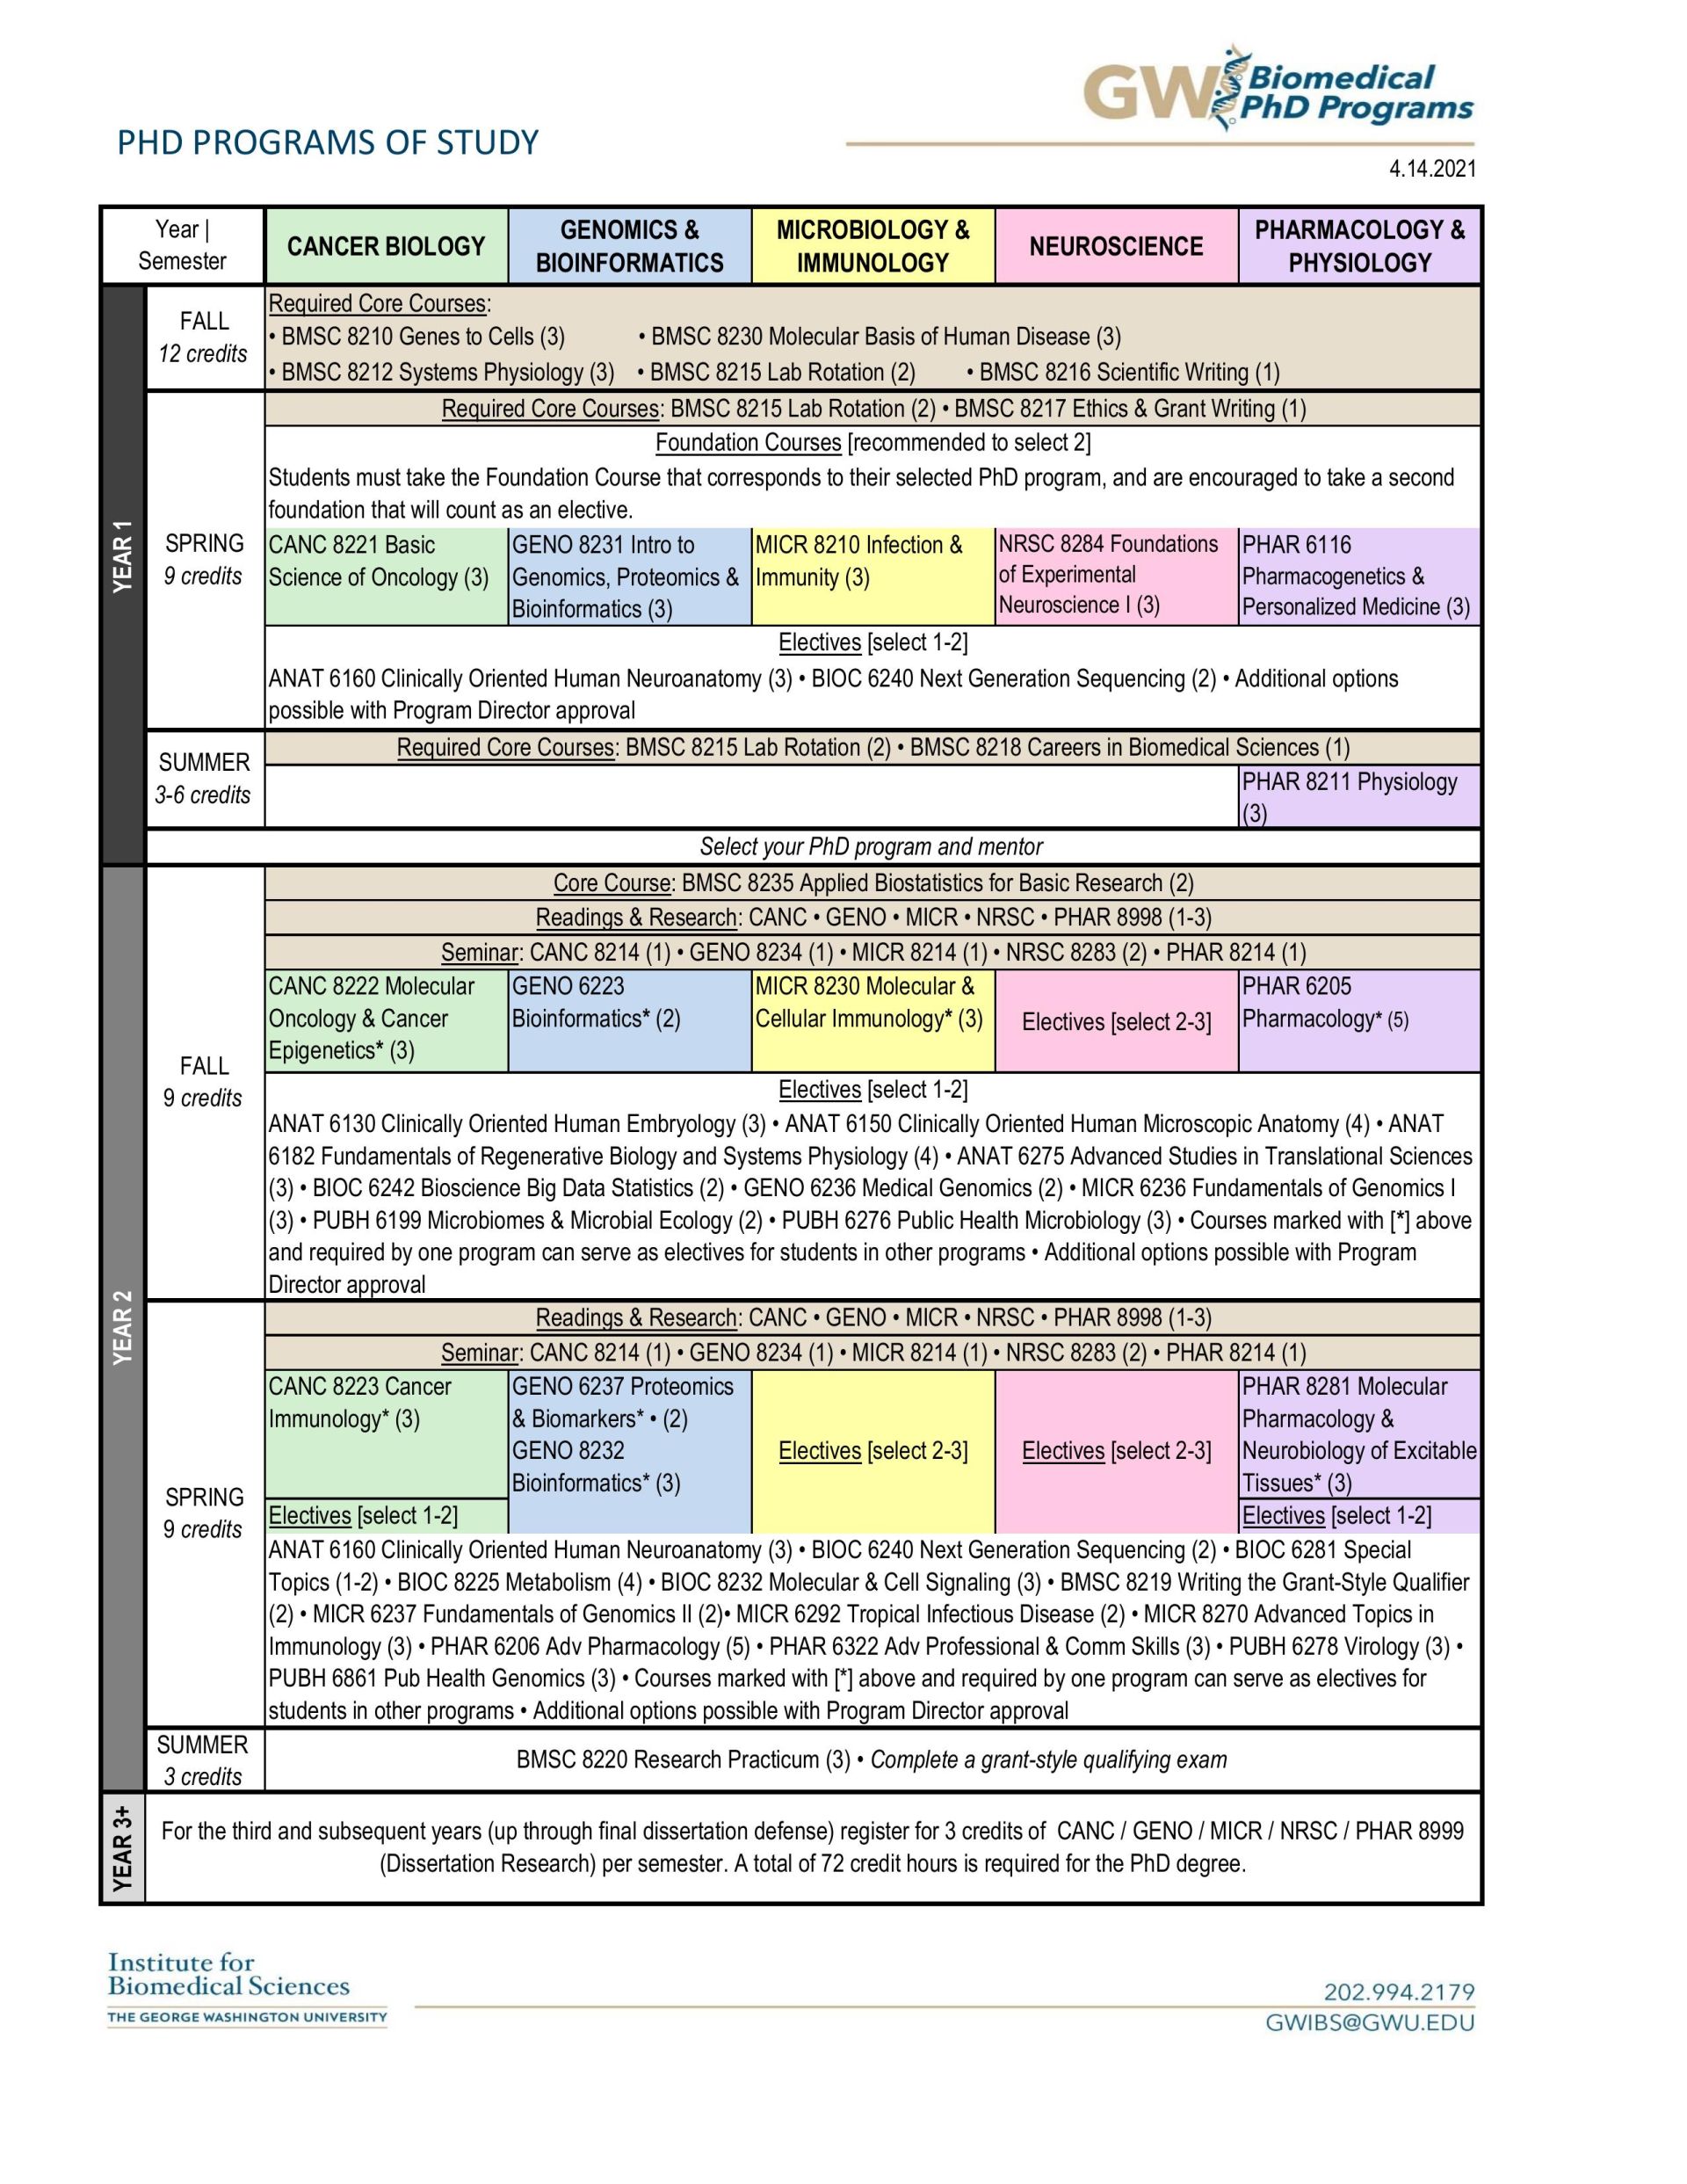 IBS Programs of Study chart